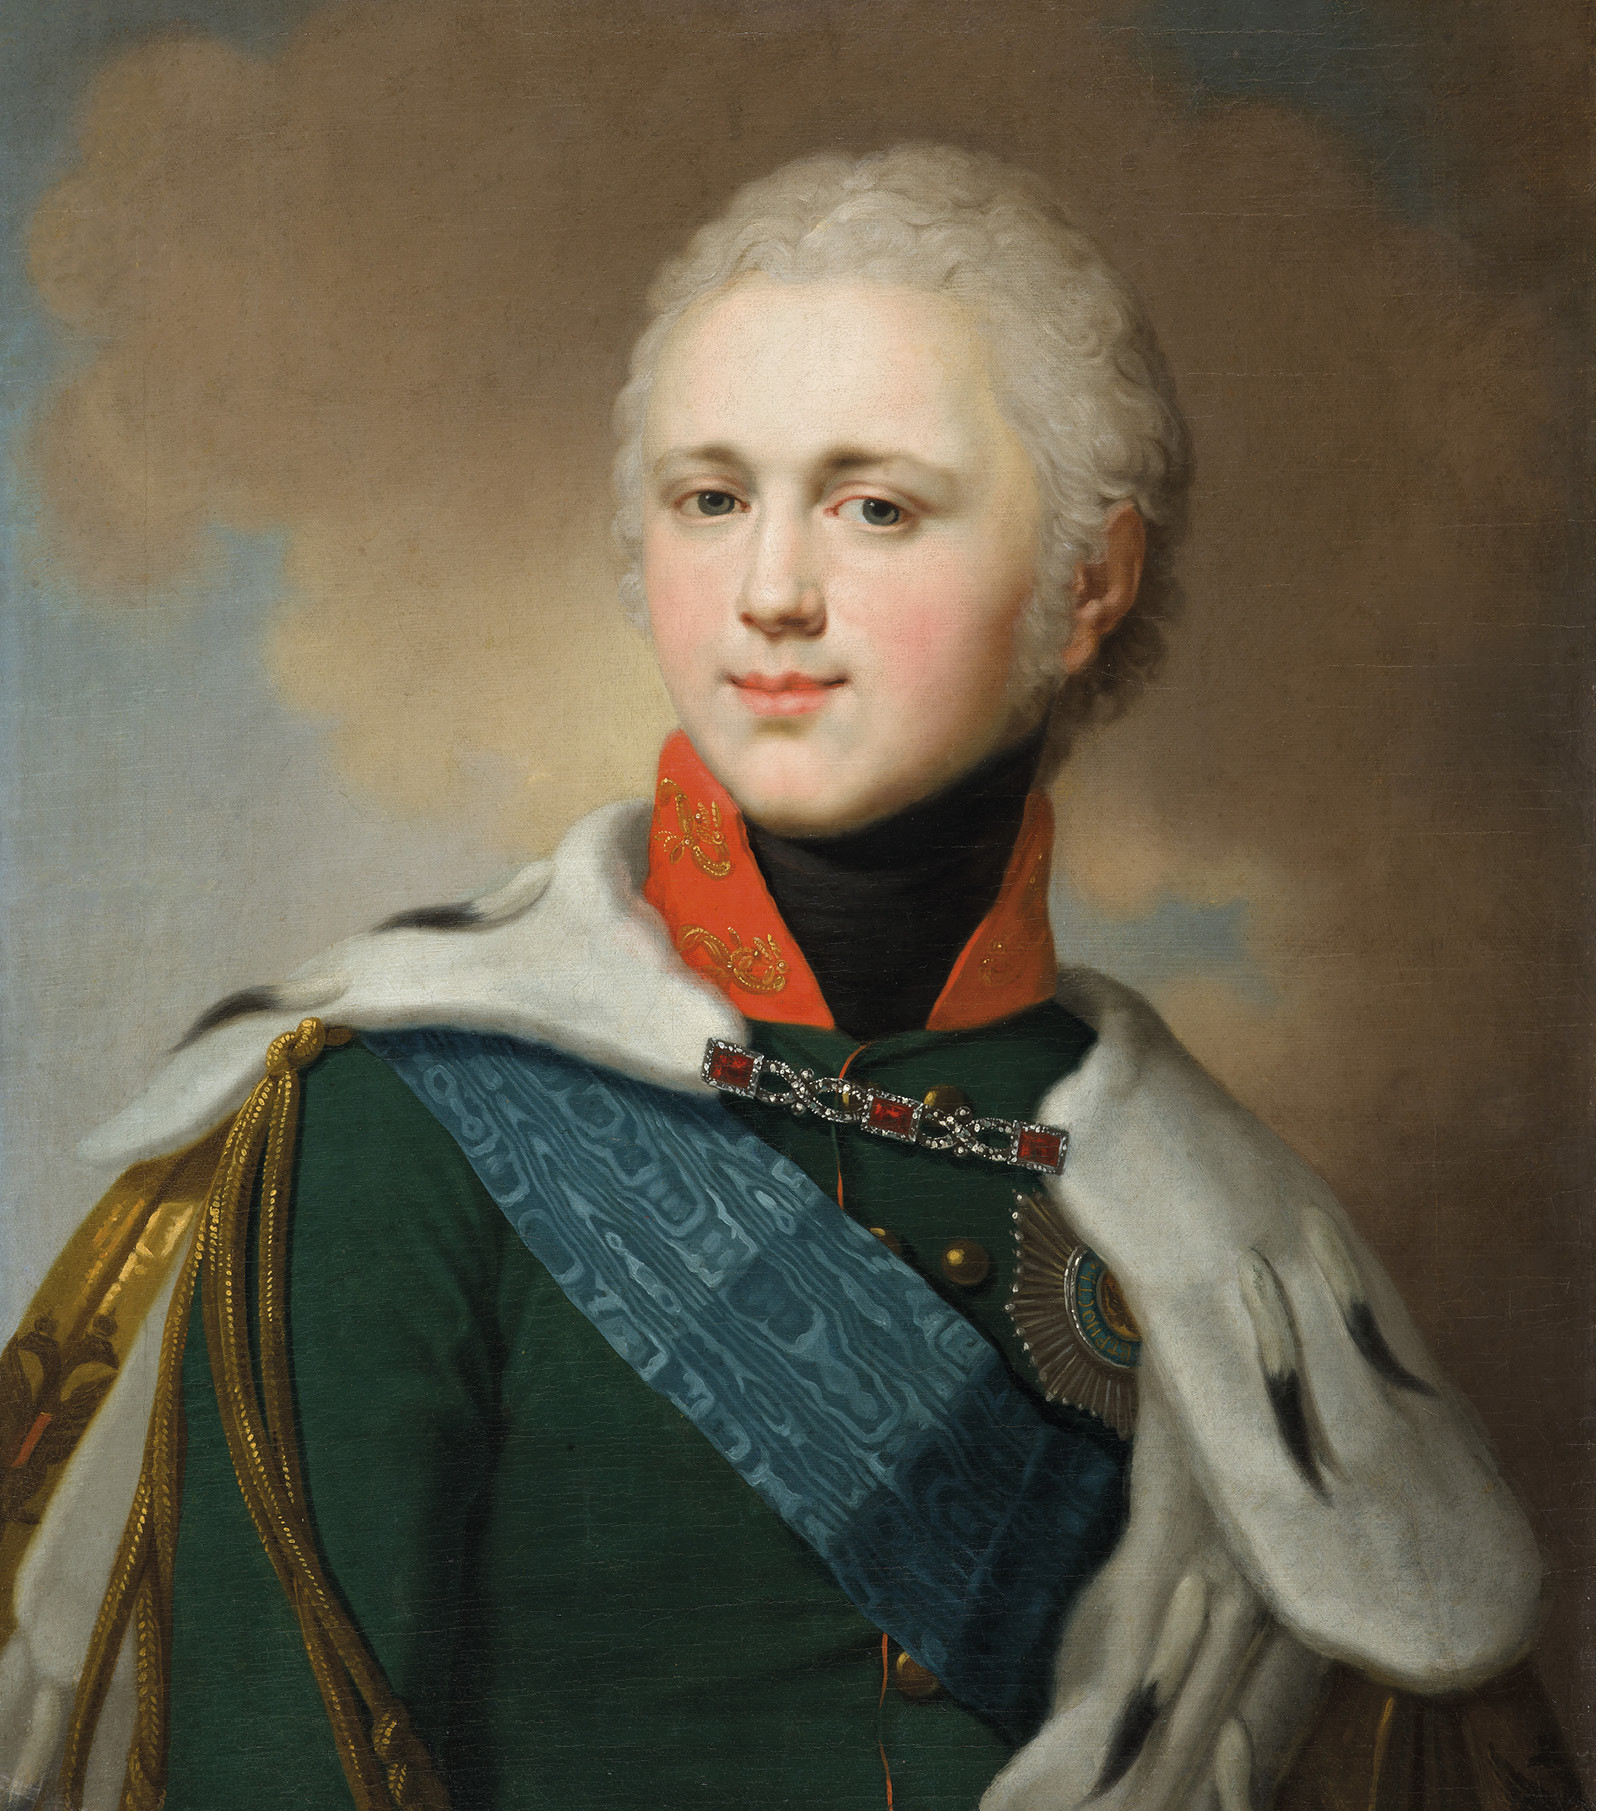 Портрет императора Александра I (1777-1825).